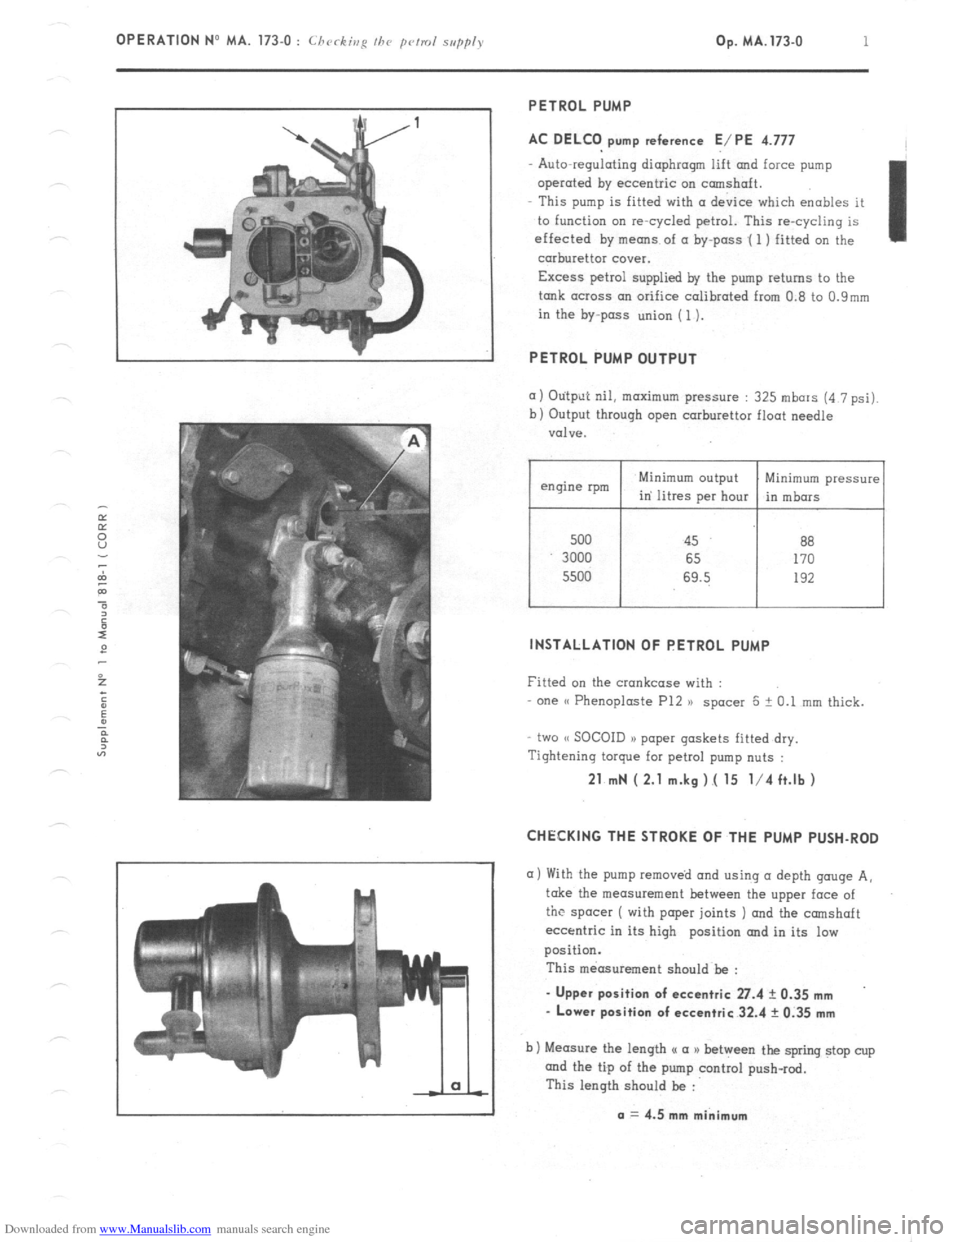 Citroen CX 1981 1.G User Guide Downloaded from www.Manualslib.com manuals search engine OPERATION No MA. 173-O : Chrrkivp fhr prmd s,,pp/> Op. MA. 173.0 1 
PETROL PUMP 
AC DELCO pump reference E/PE 4.777 
Auto-regulating diaphragm 